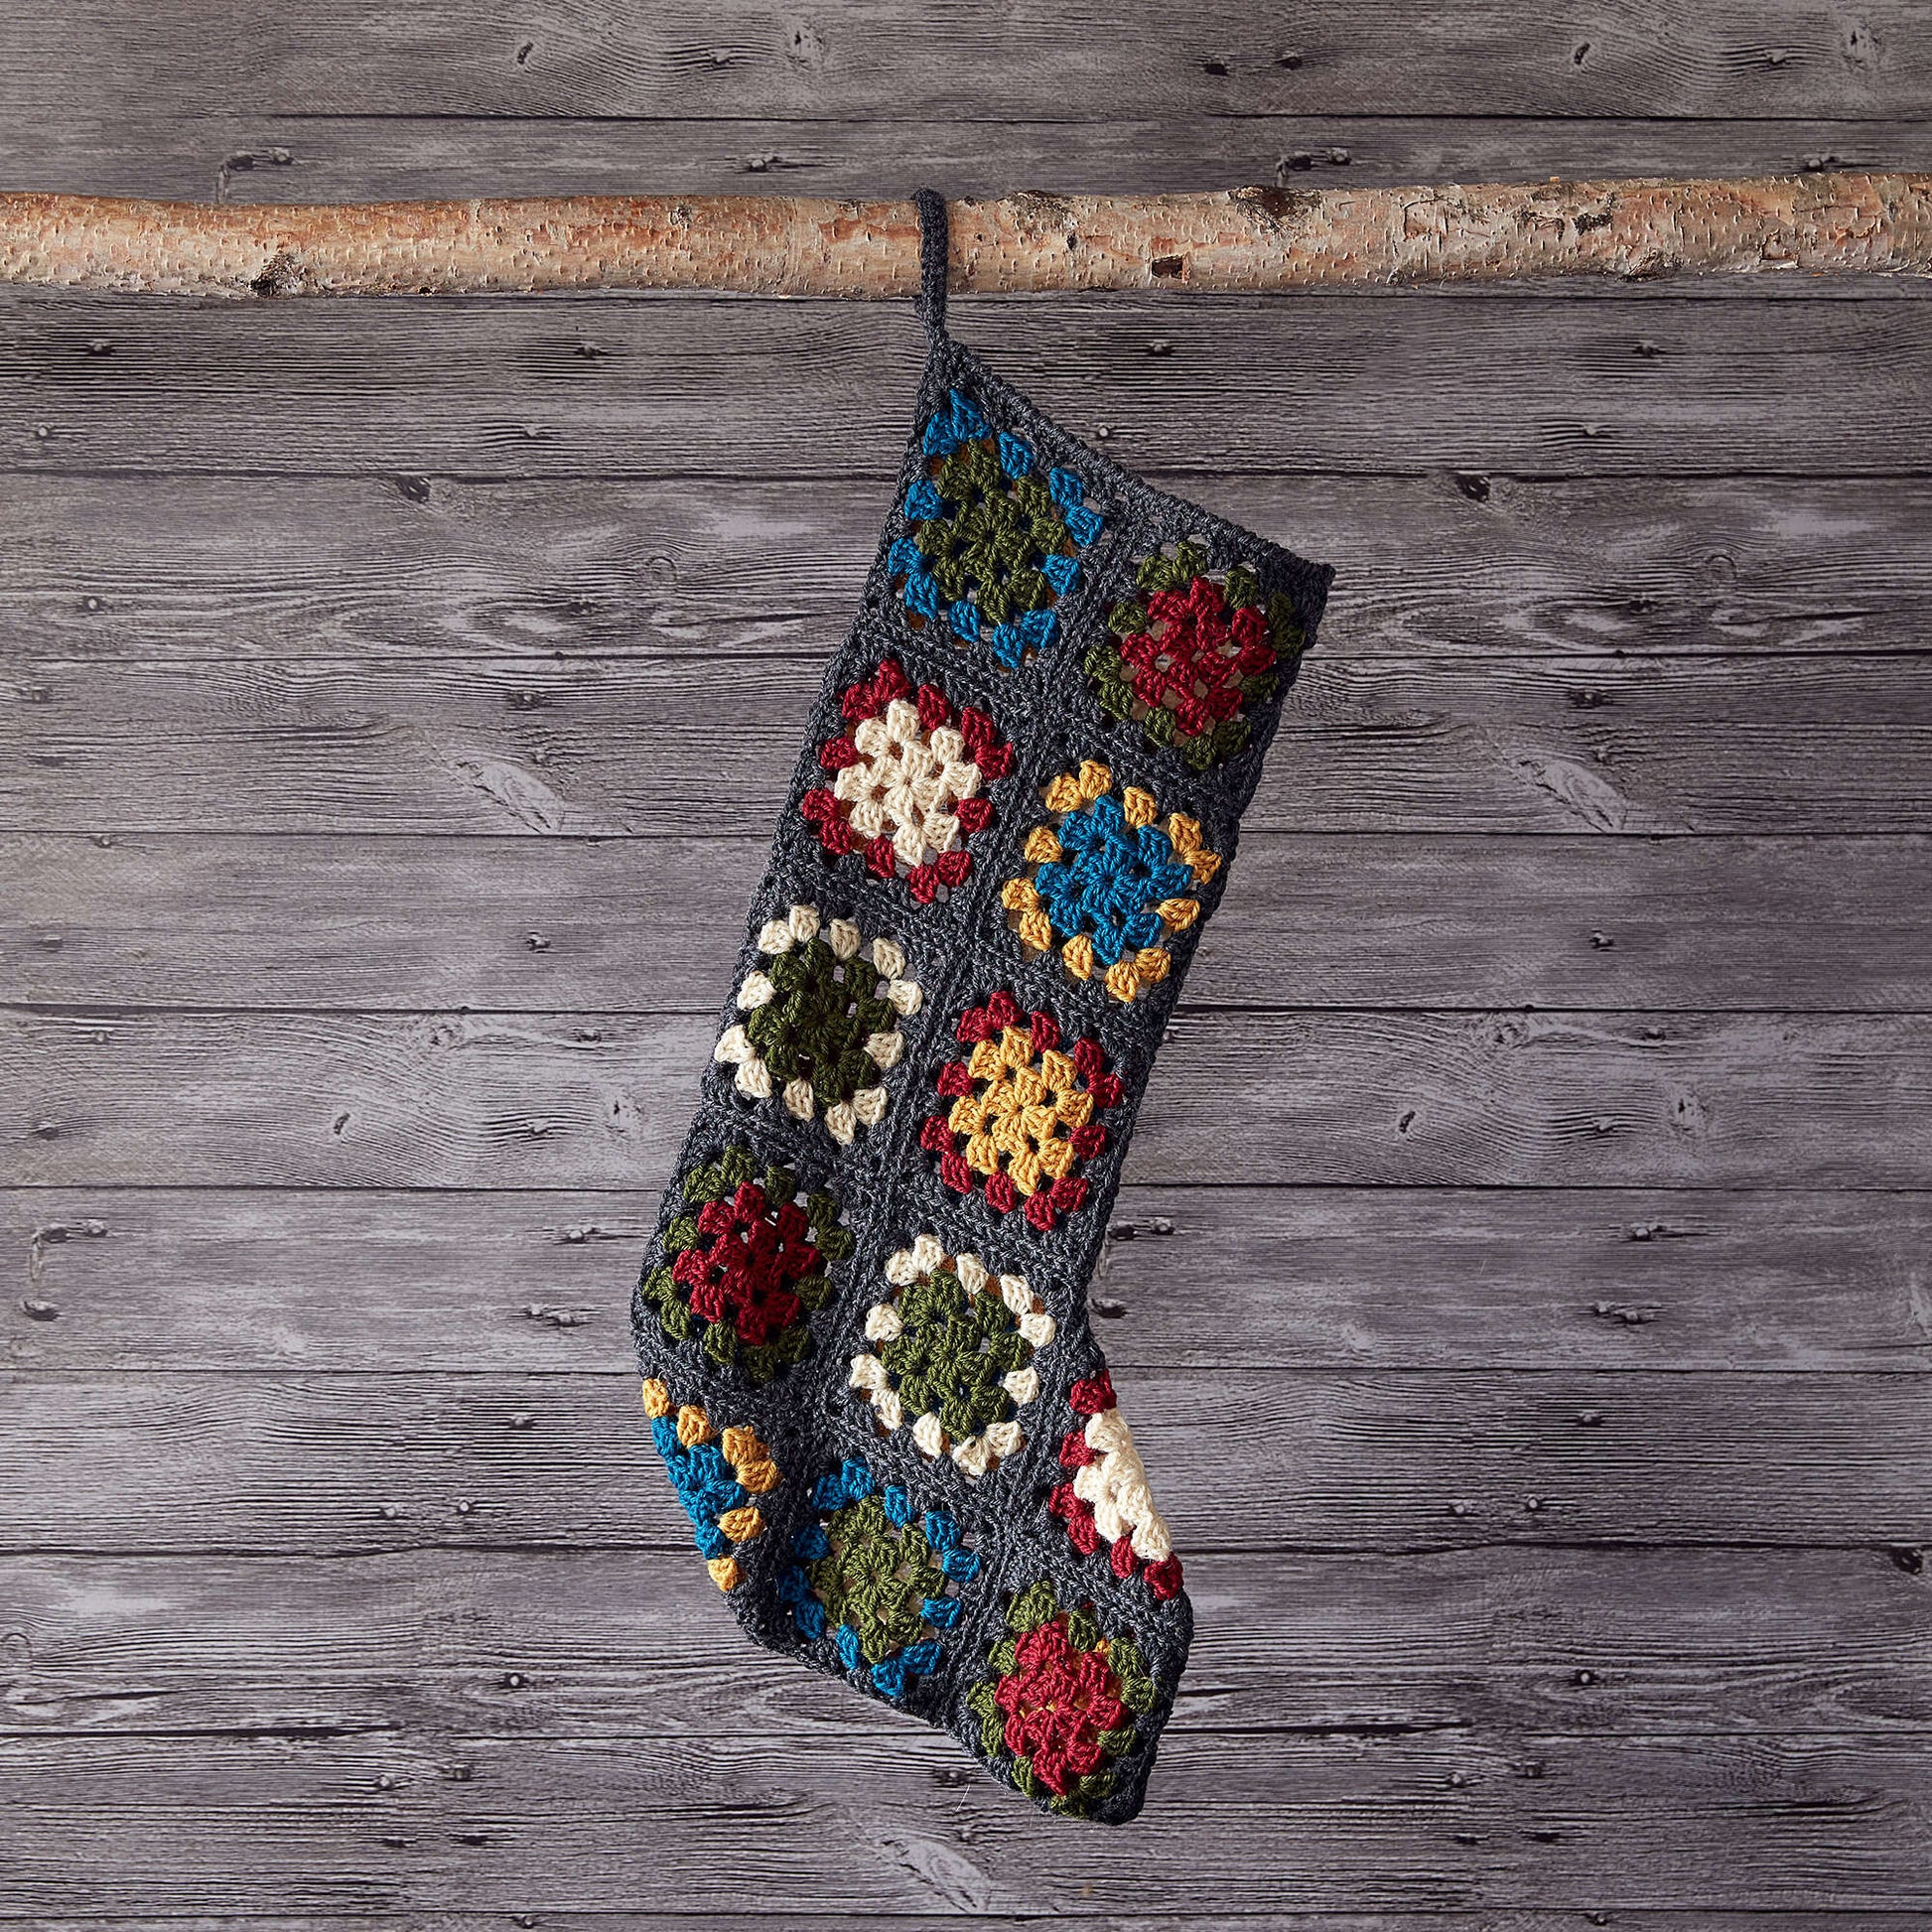 Free Patons Crochet Granny Square Stocking Pattern